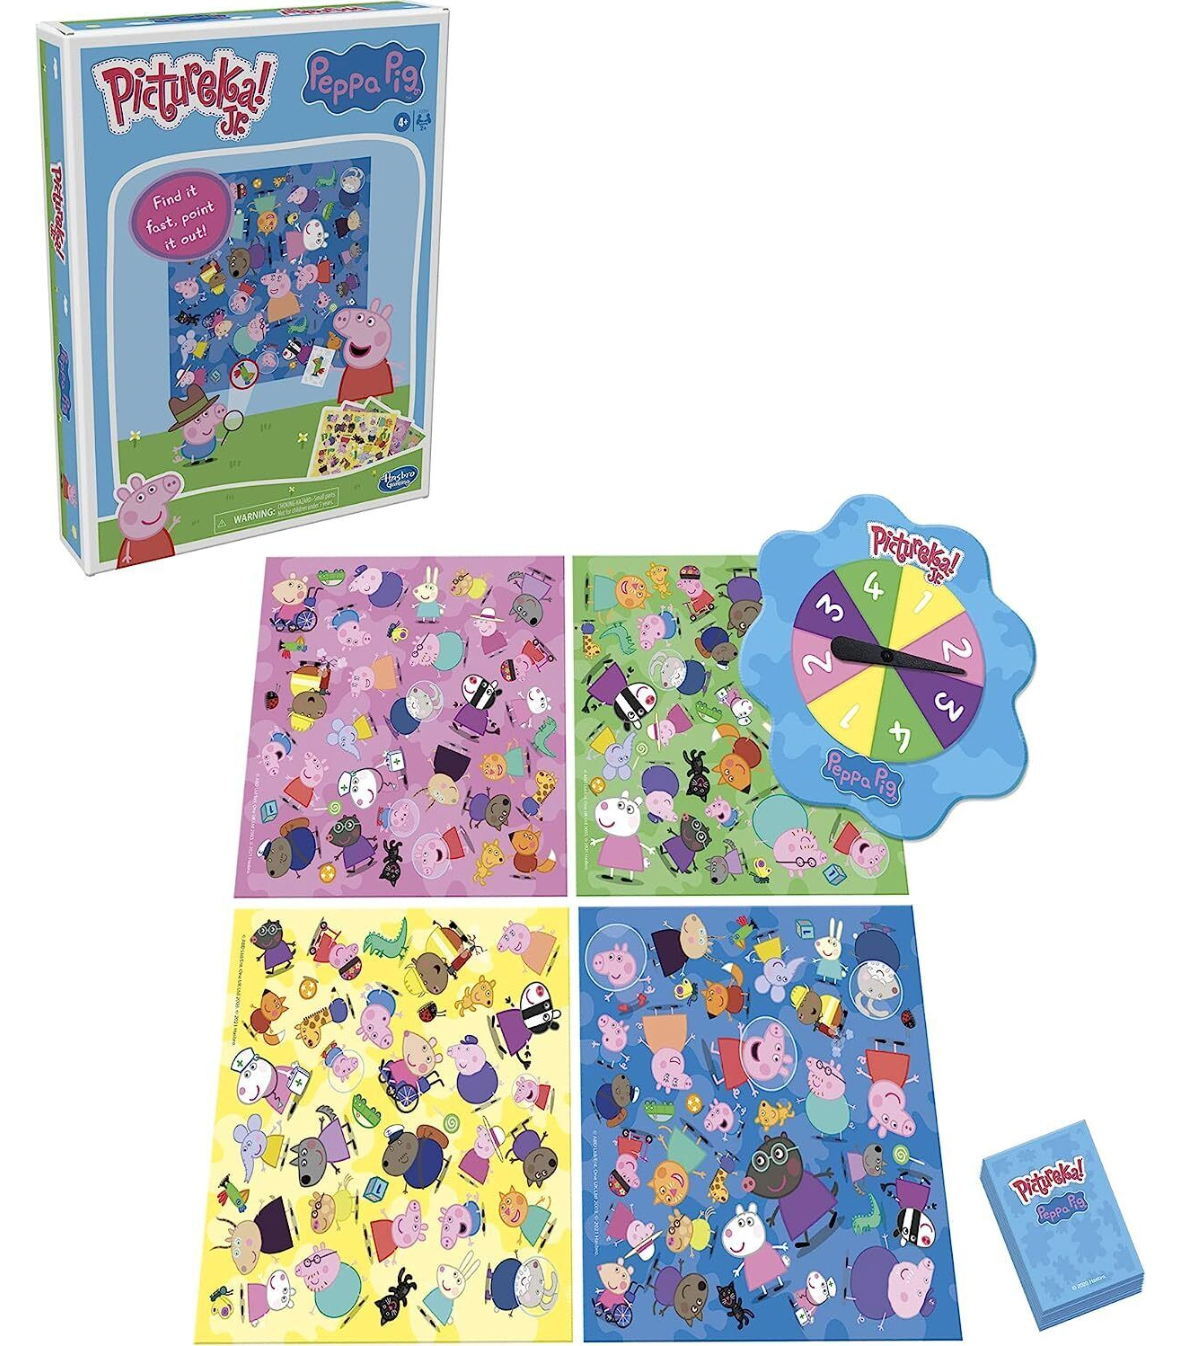 Game Pictureka Jr Peppa Pig Board Game